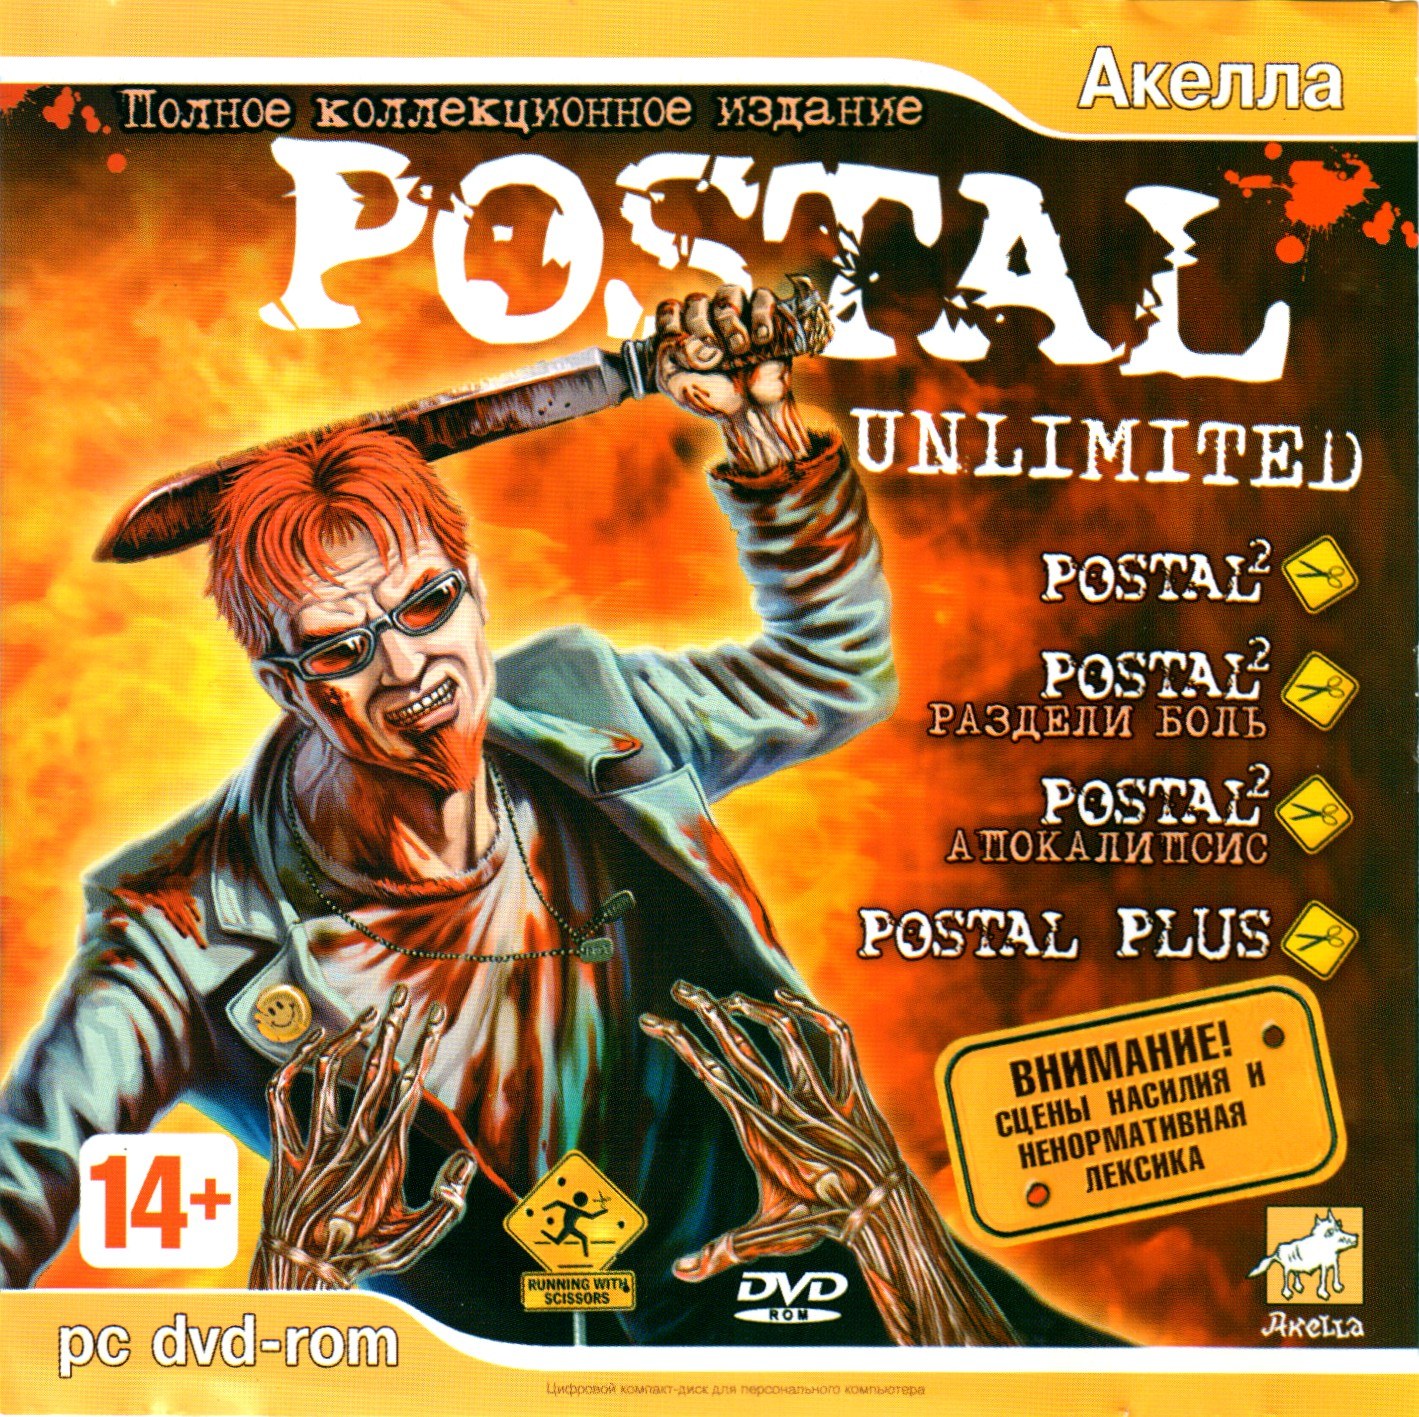 Postal 2 awp dr review фото 49